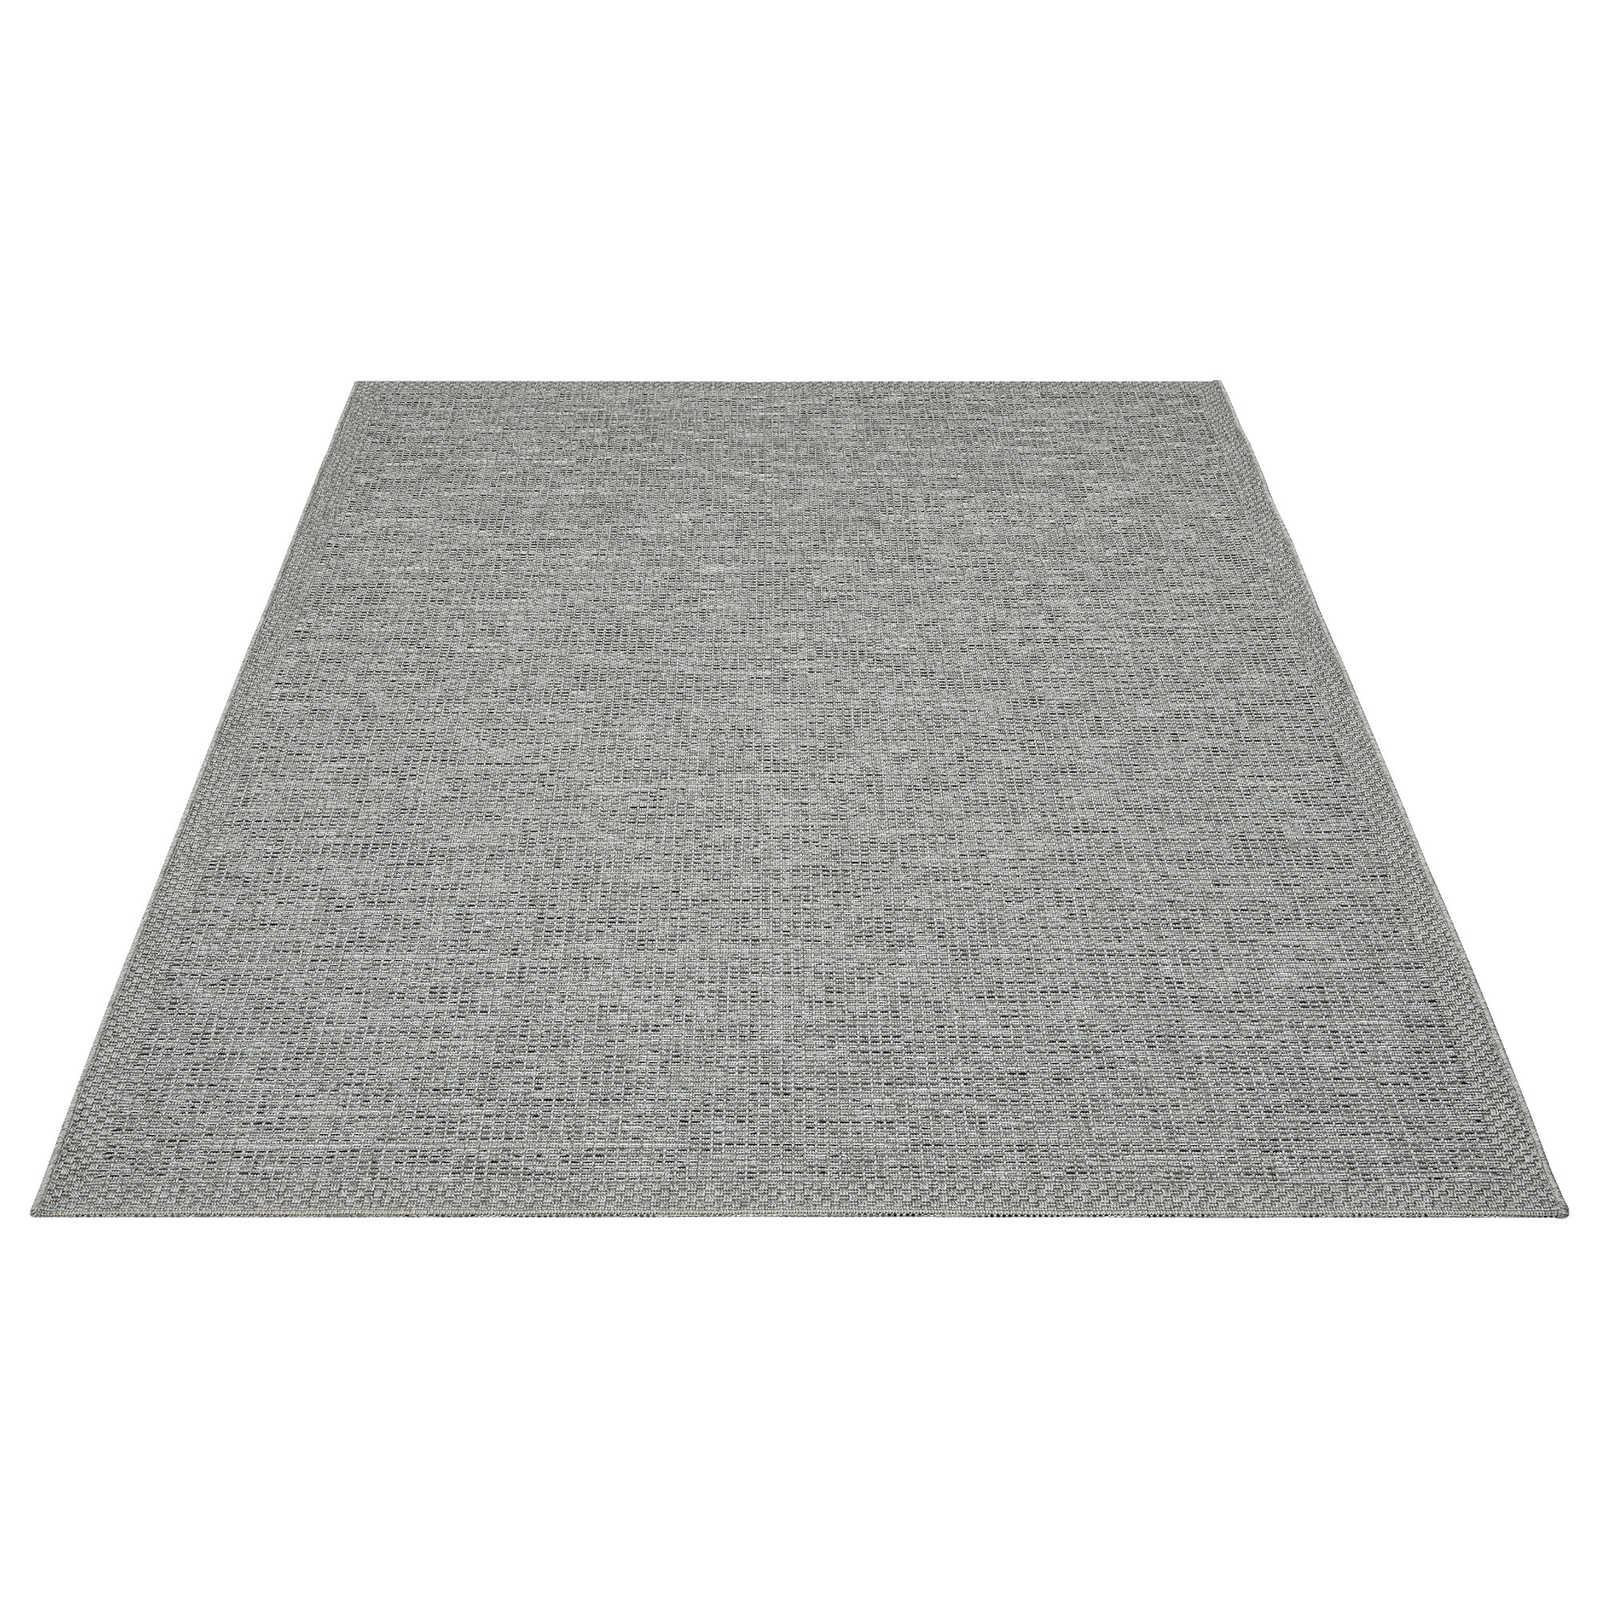 Plain Carpet in Grey - 280 x 200 cm
